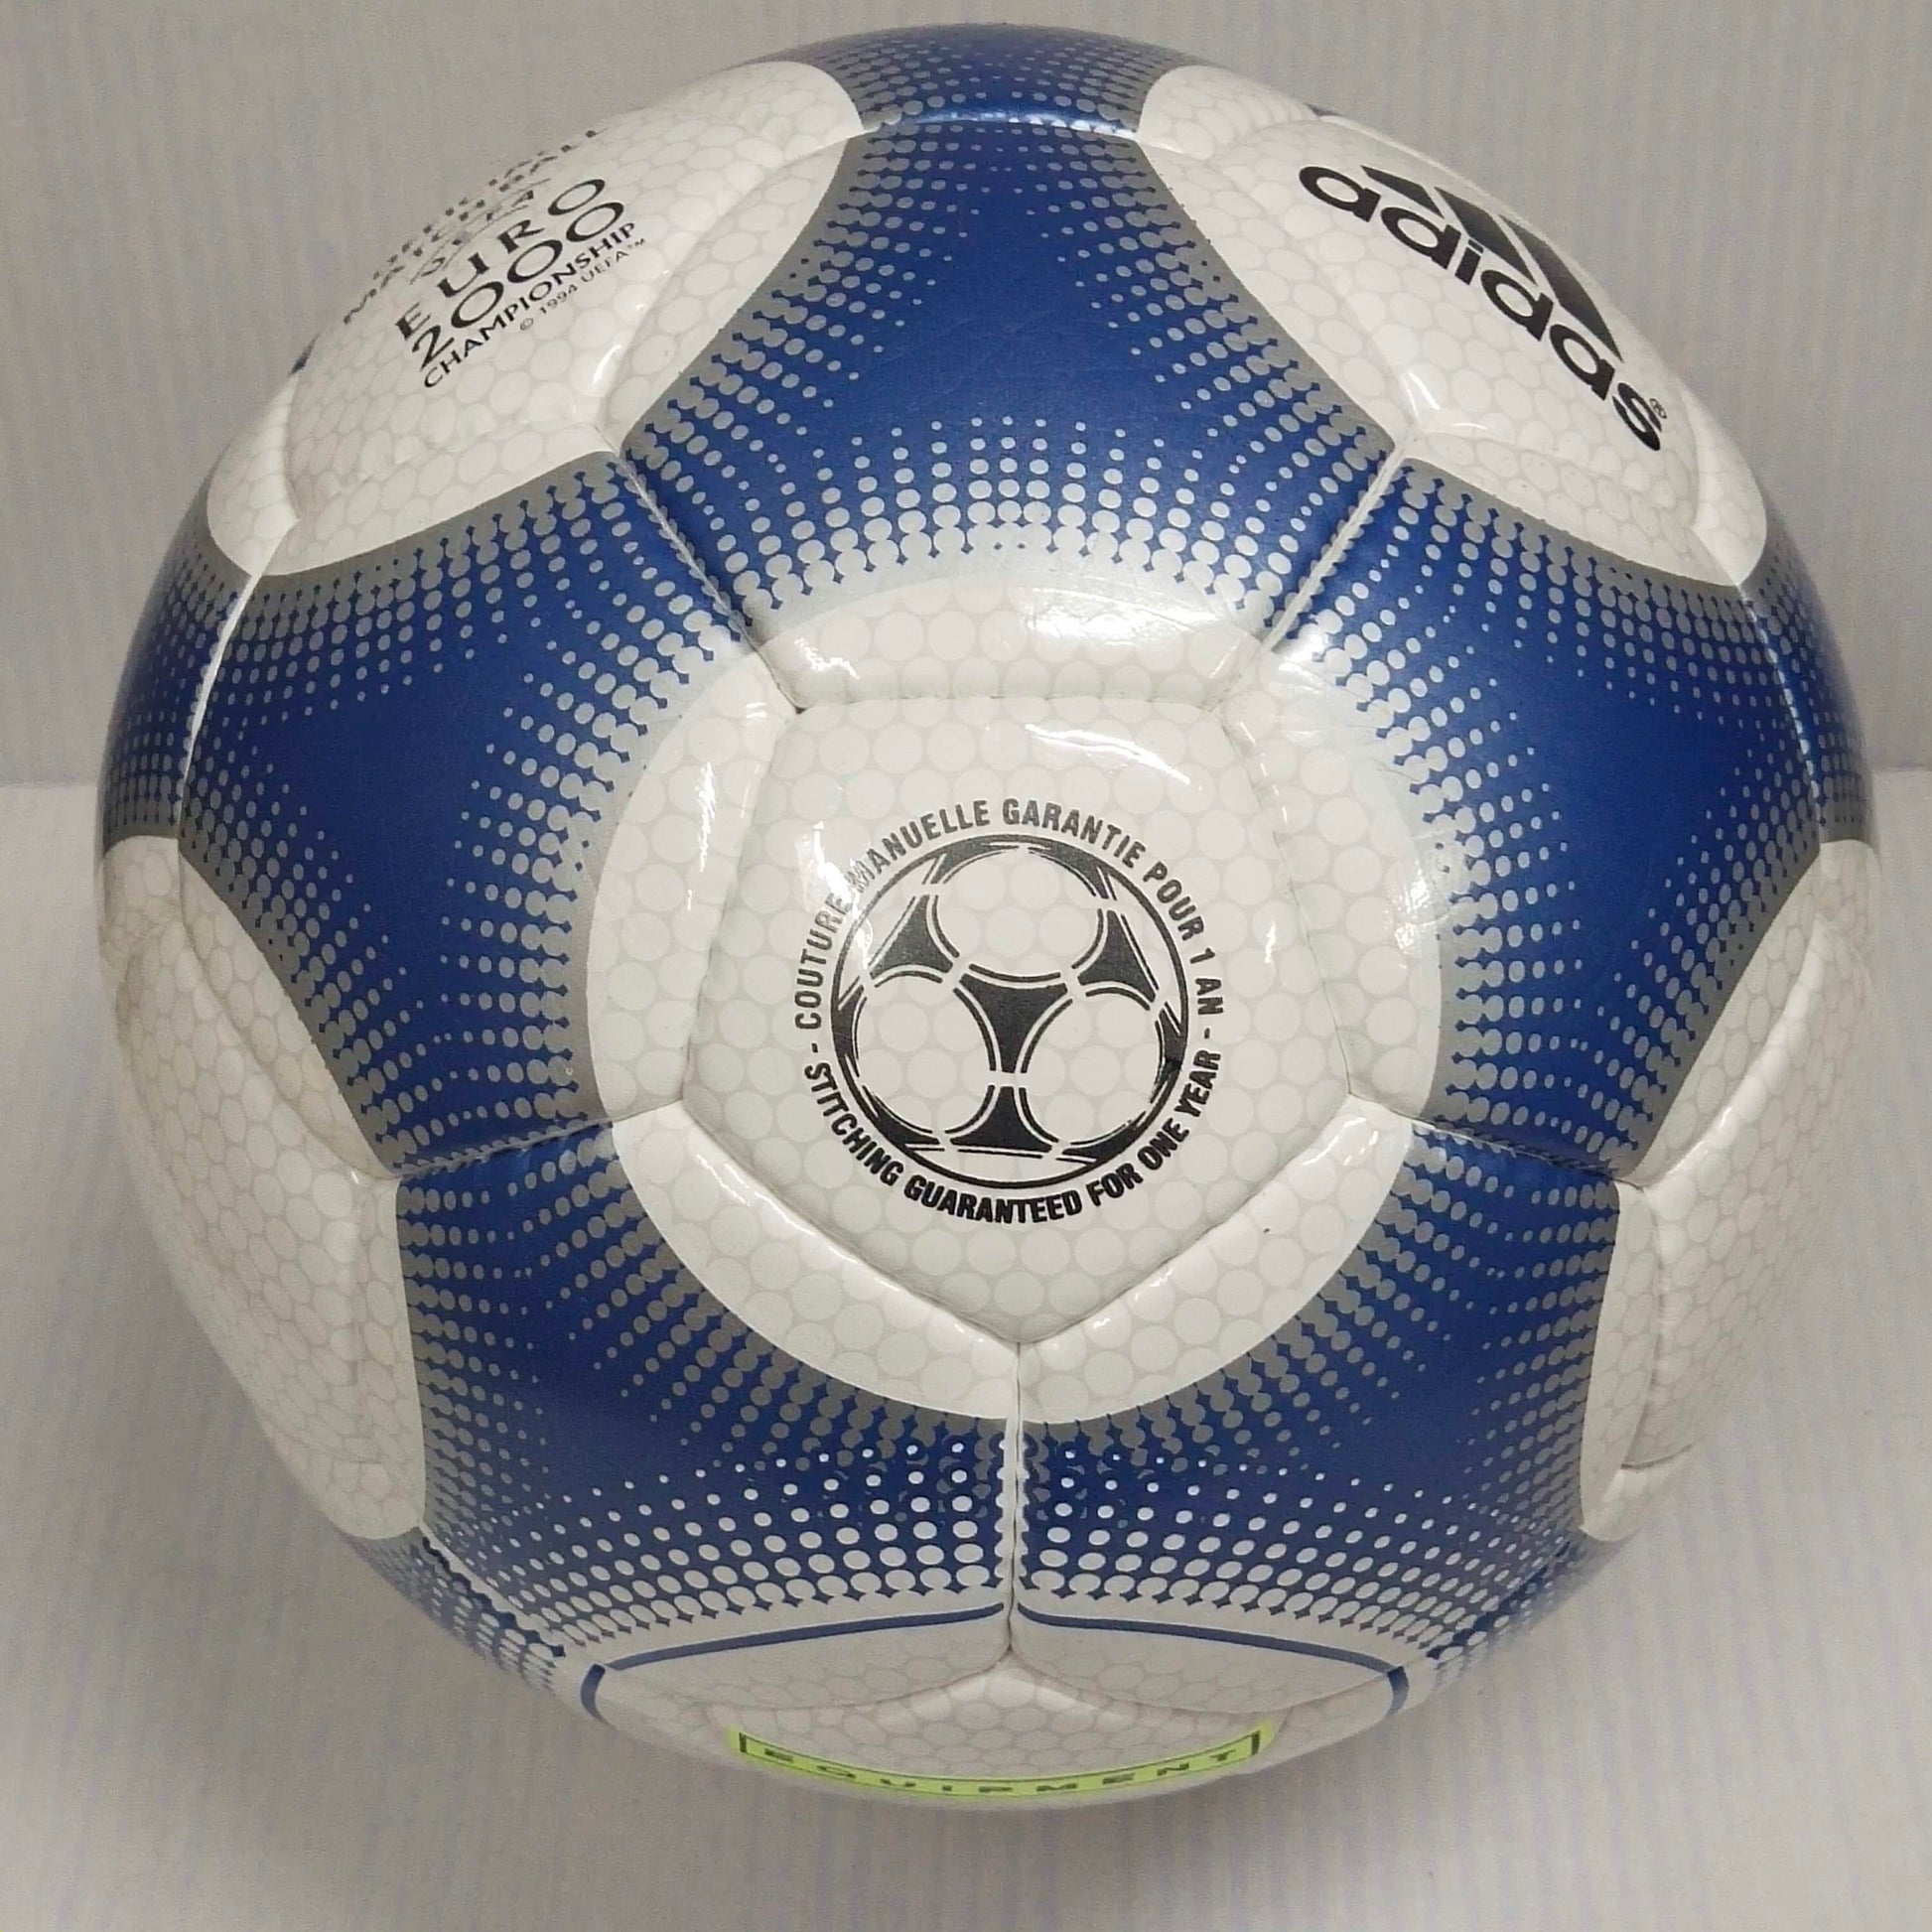 Adidas Terrestra Silver Stream | 2000 | UEFA Europa League | Official Match Ball | Size 5 03